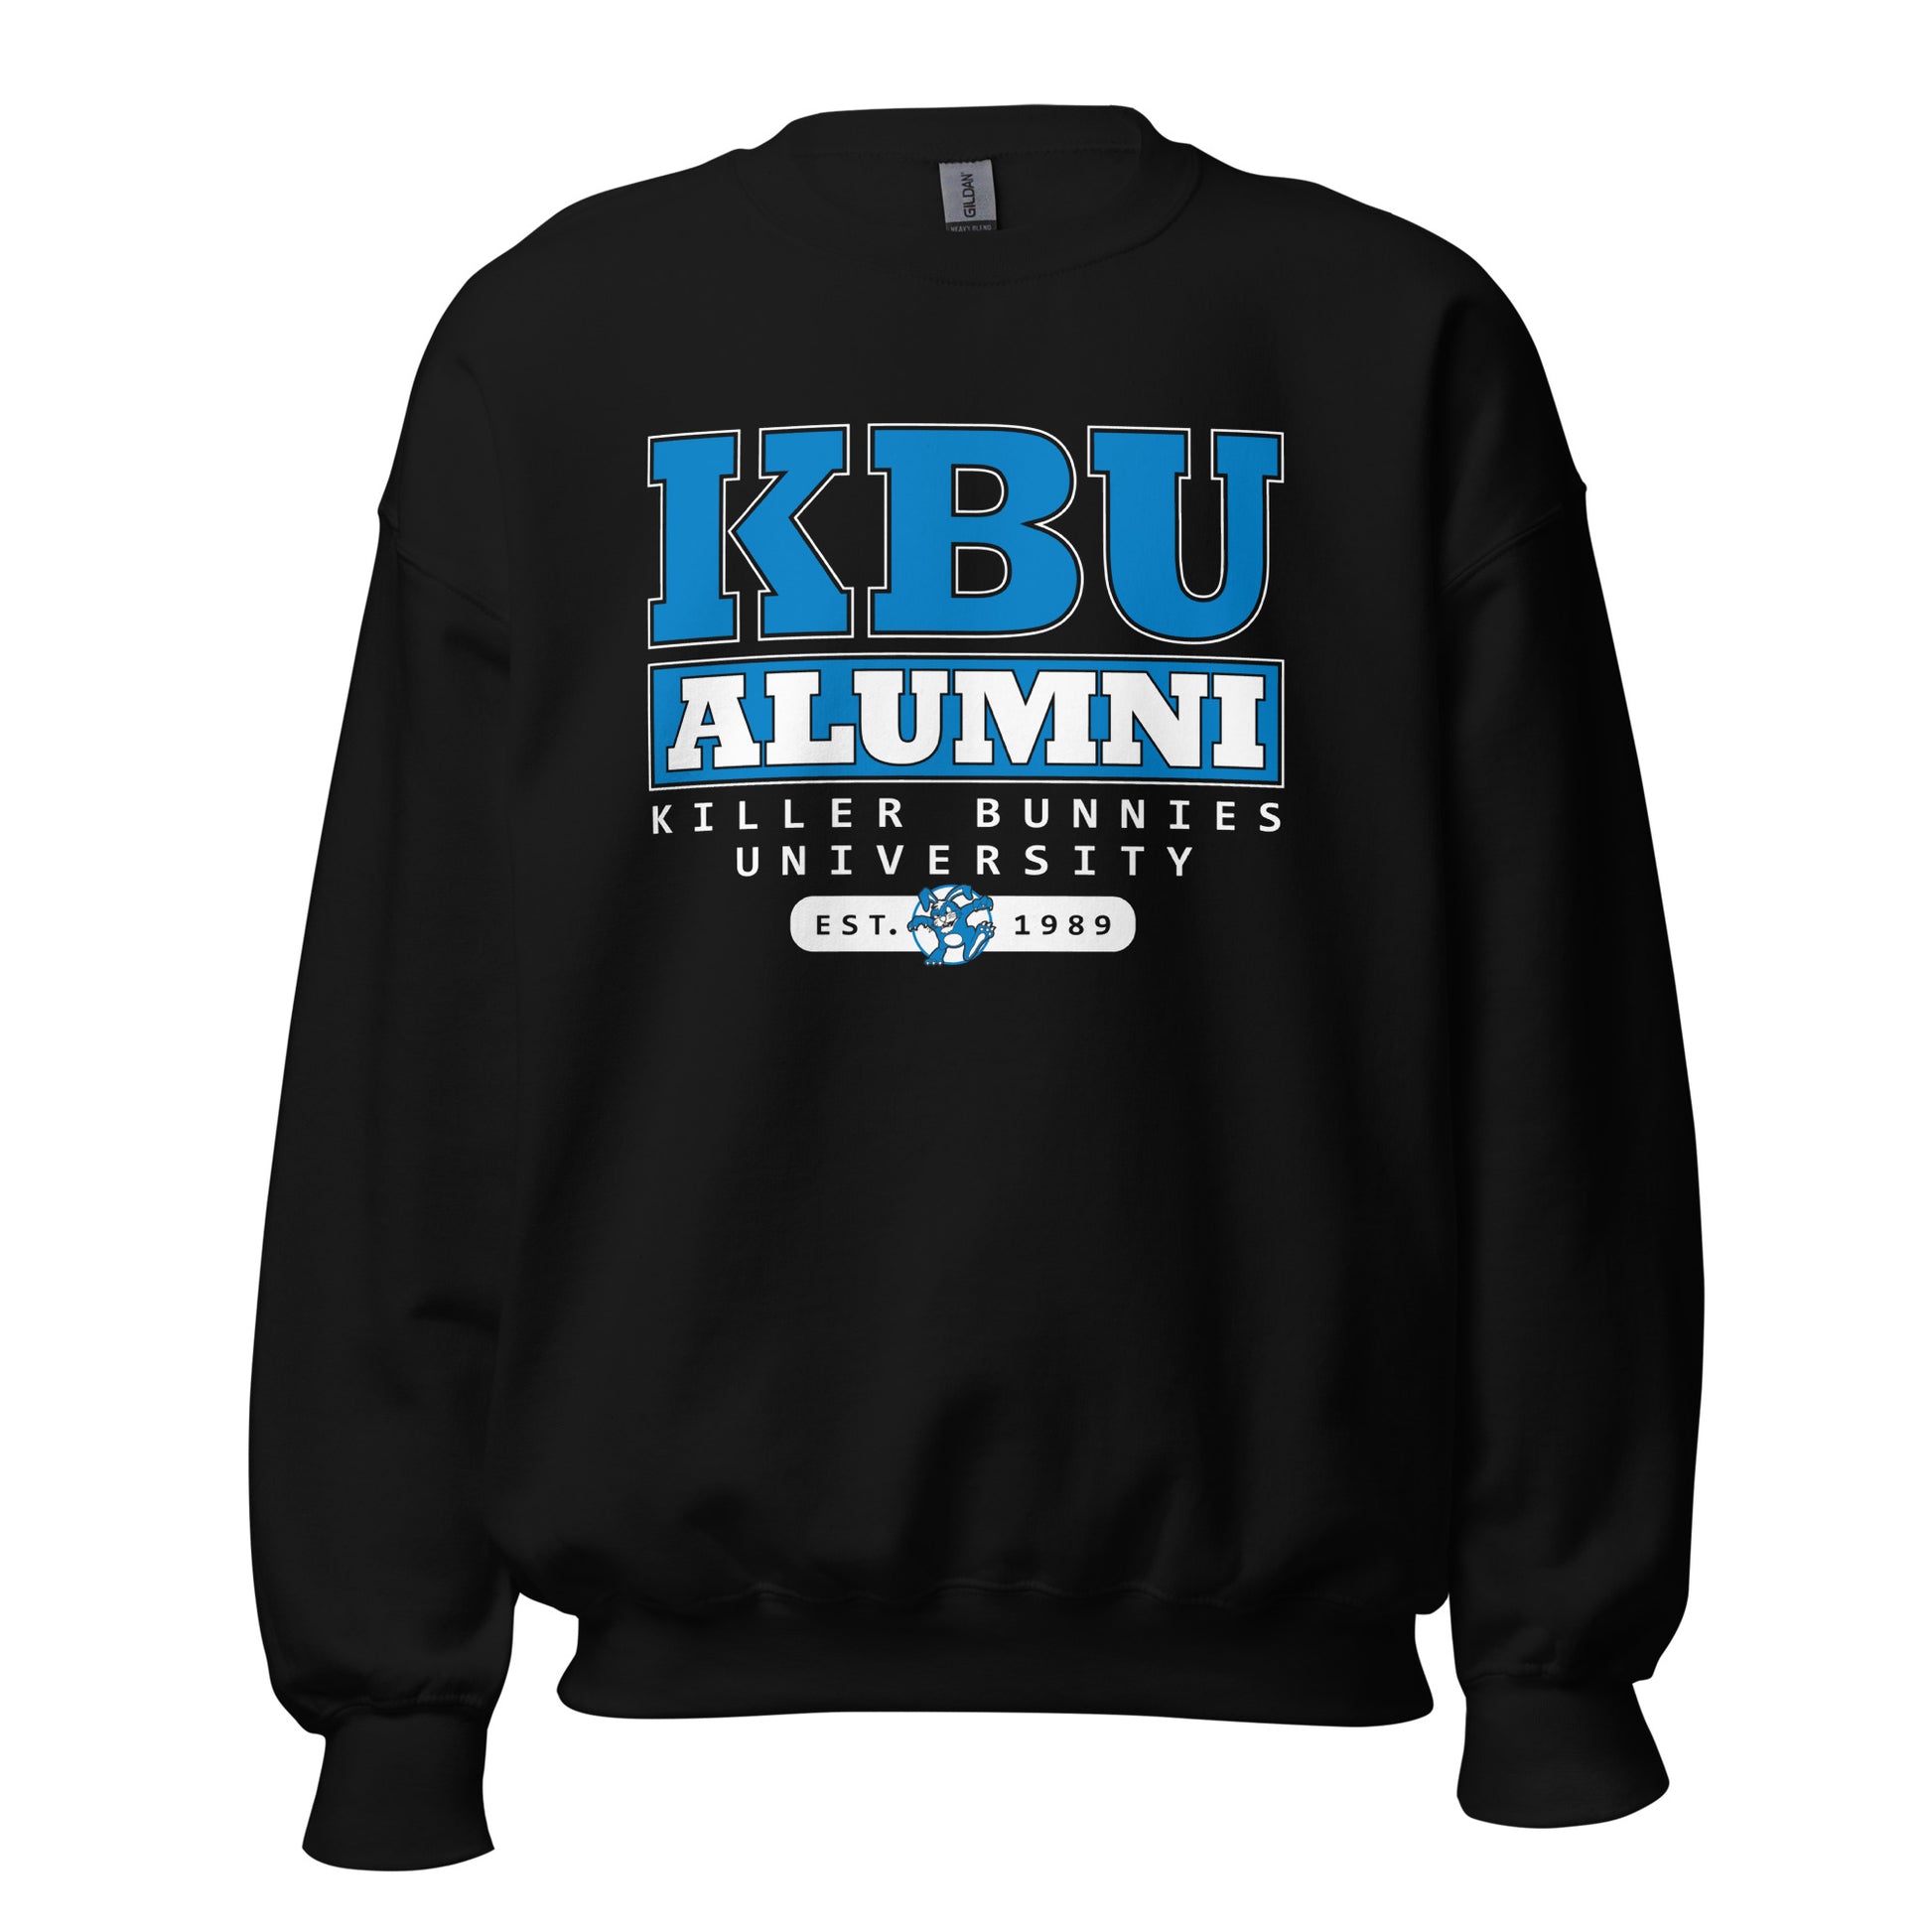 Killer Bunnies Alumni Unisex Sweatshirt - Black